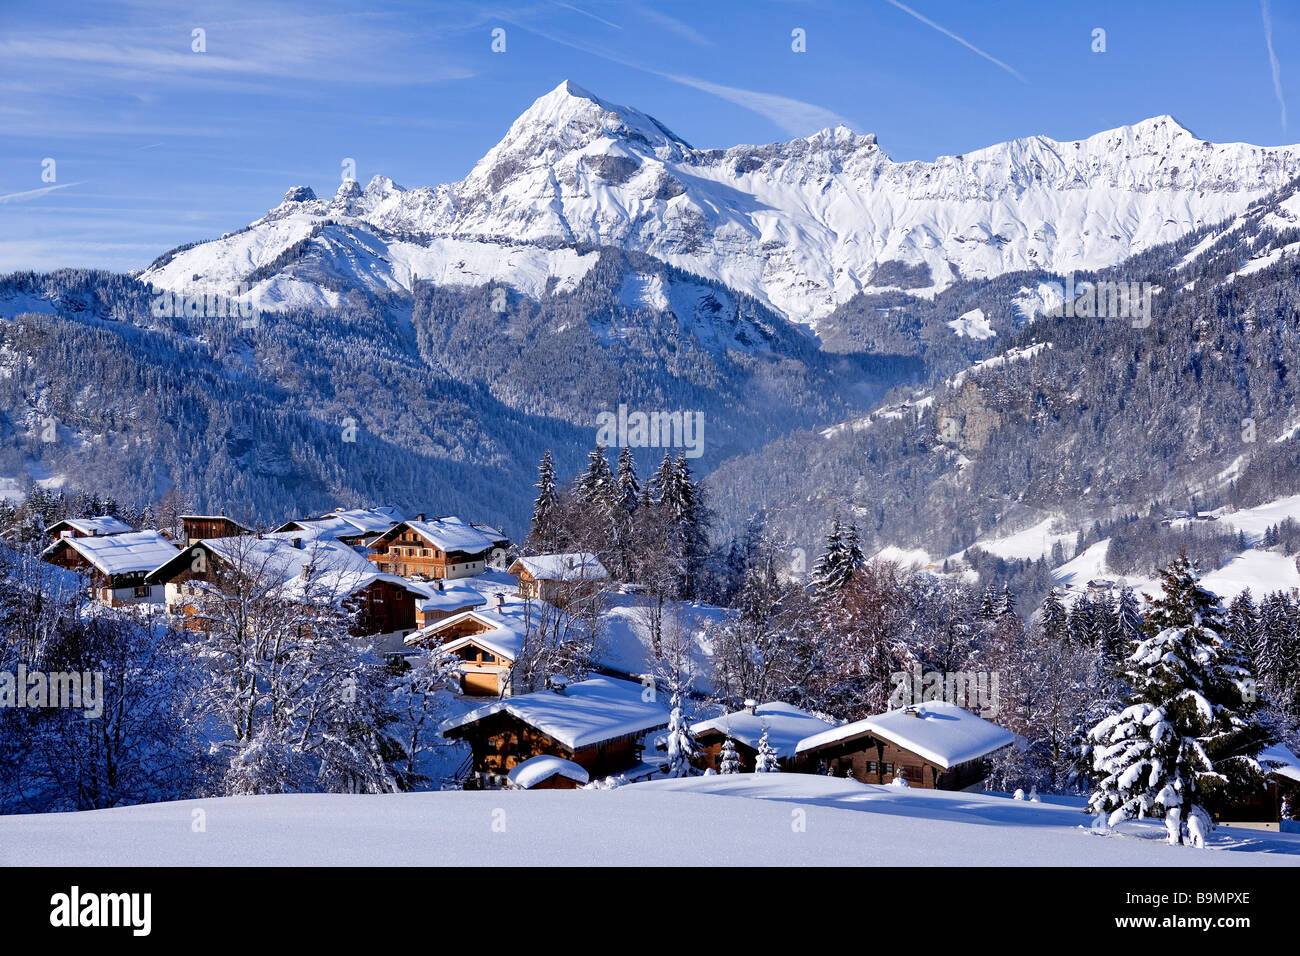 France, Savoie, Crest Volant, the Beaufortin mountain range Stock Photo